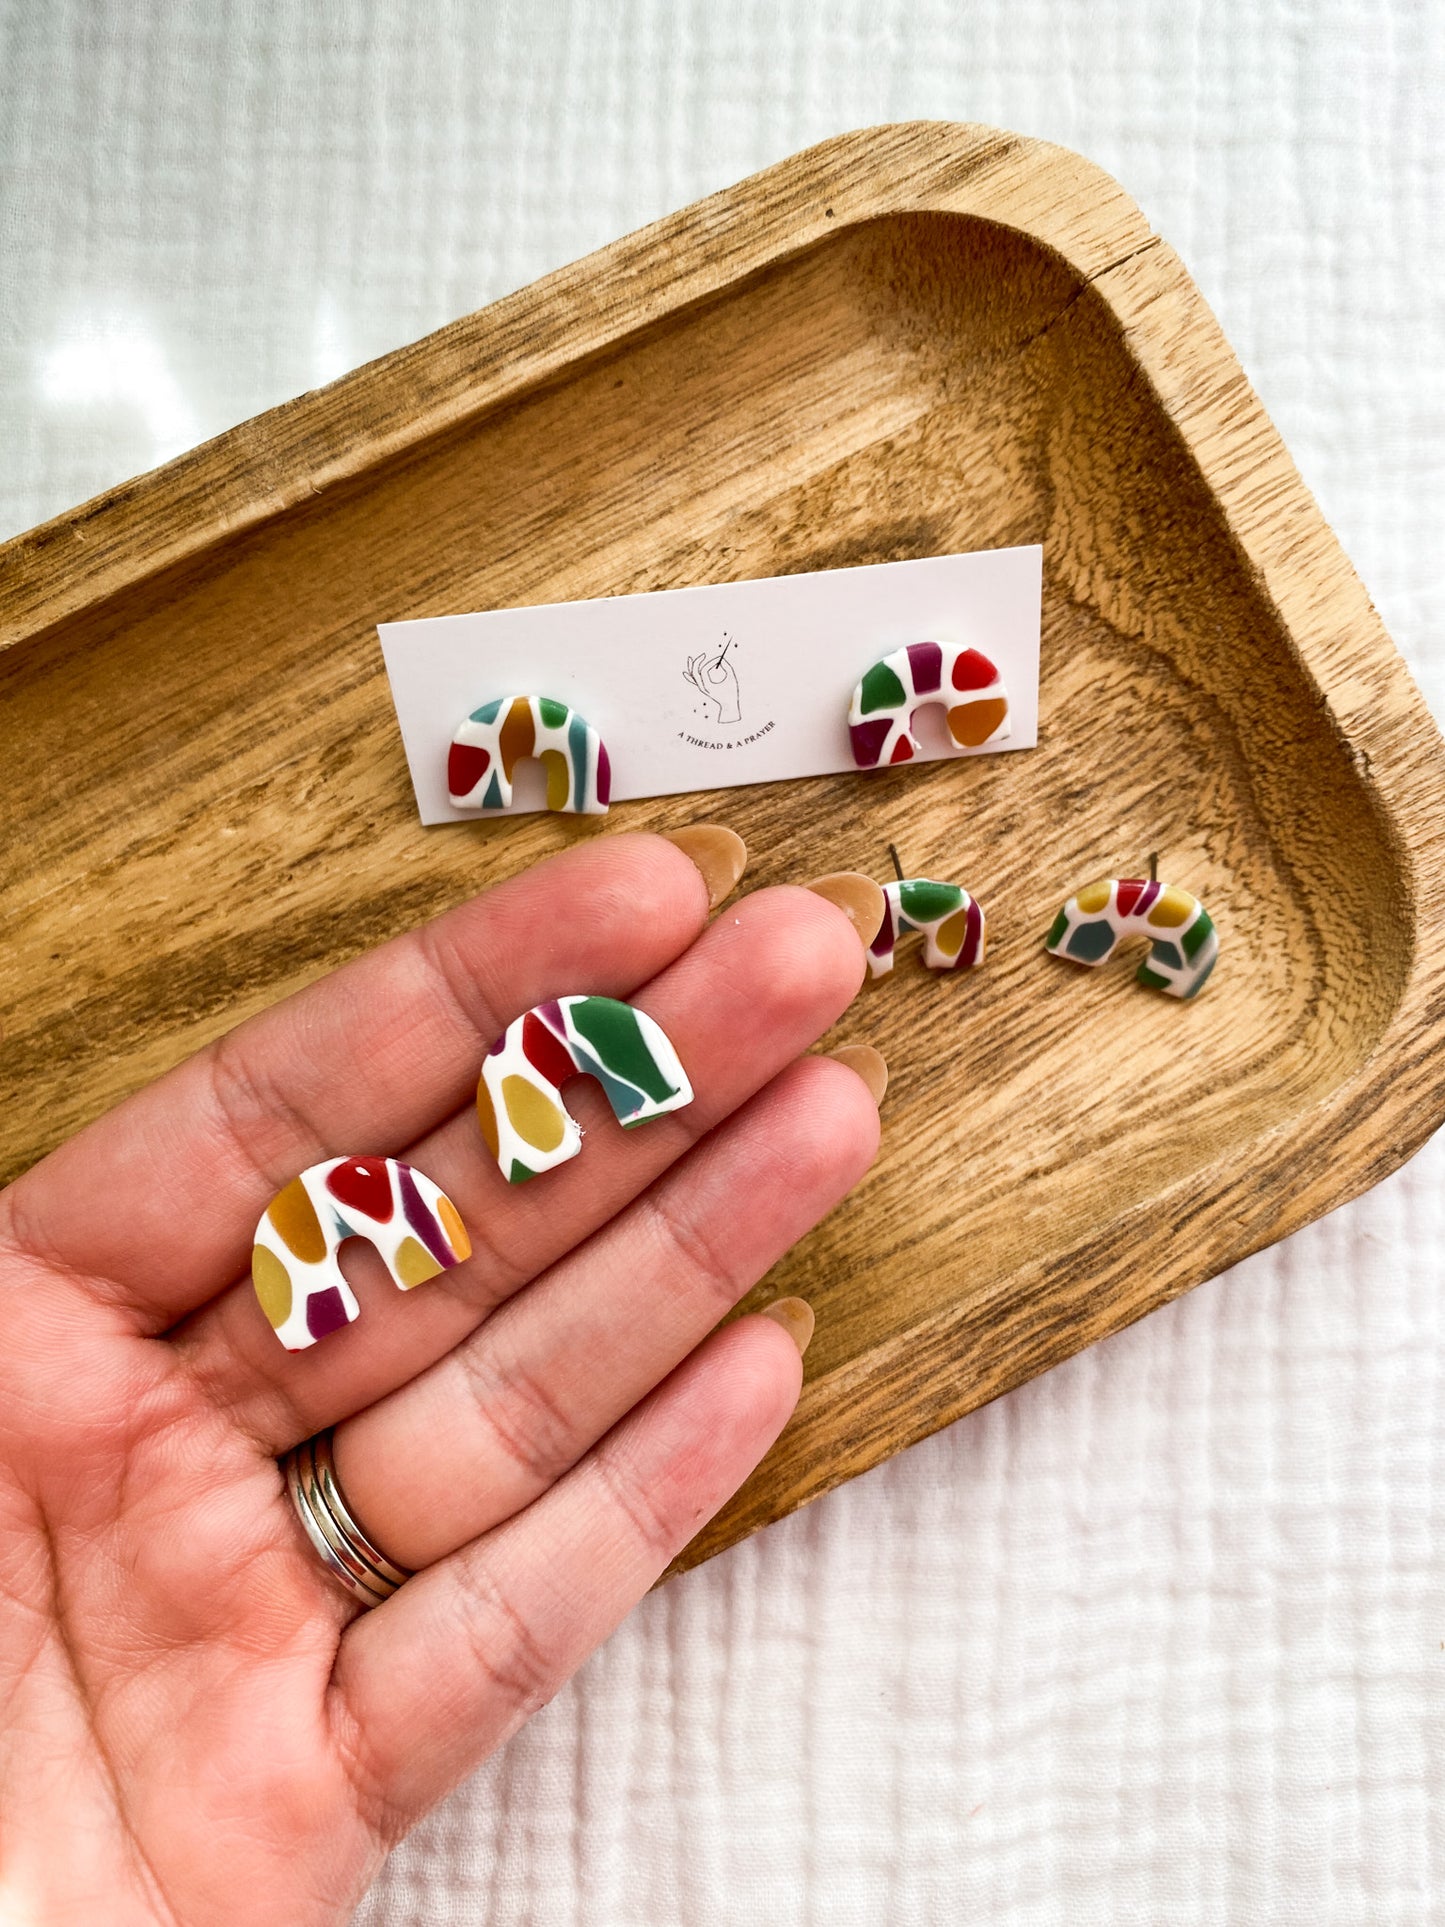 Mini Arch Rainbow Style Pride Earrings | Fun and Pride Earrings | Stud Earrings | Celebrate Pride Month | Cute Earrings | Clay Earrings